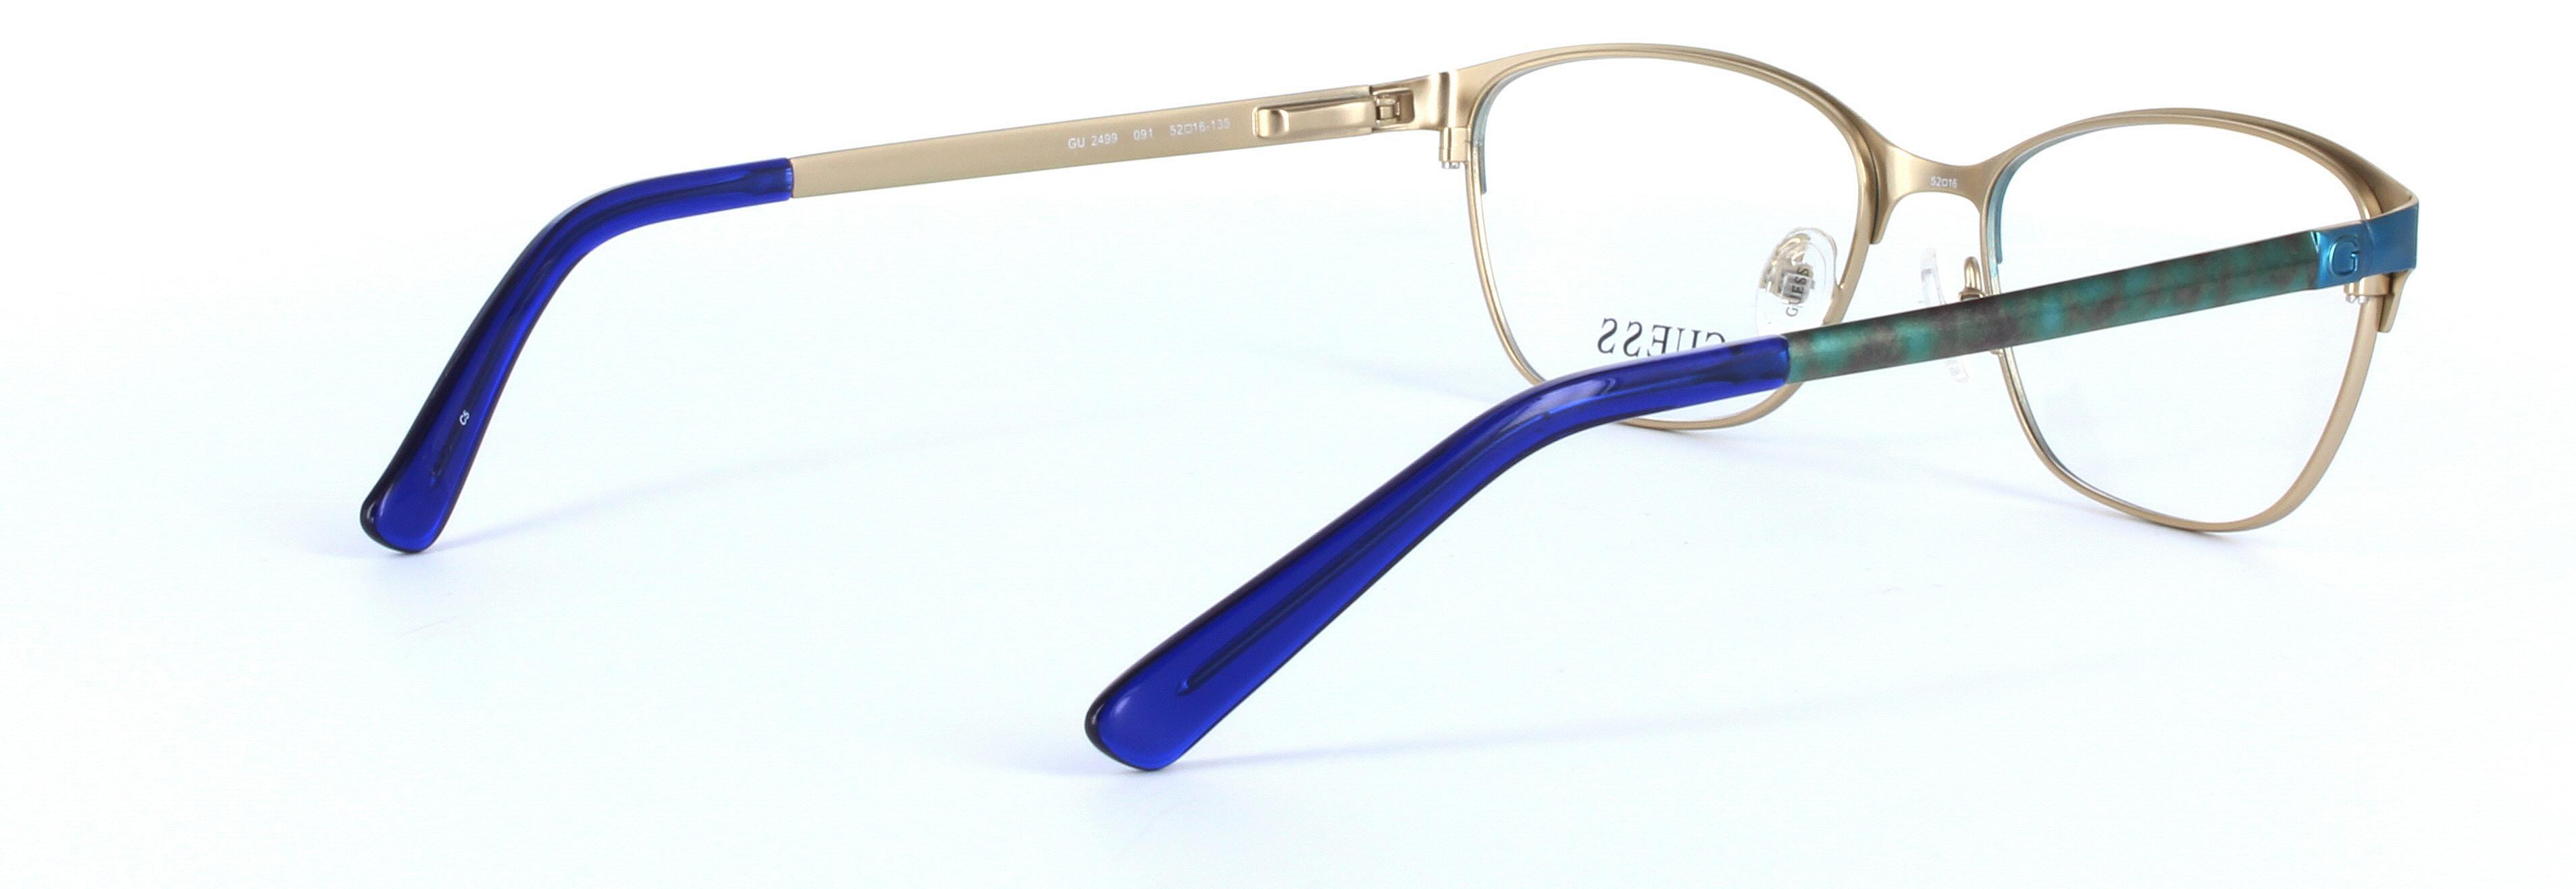 GUESS (GU2499-091) Blue Full Rim Oval Metal Glasses - Image View 4